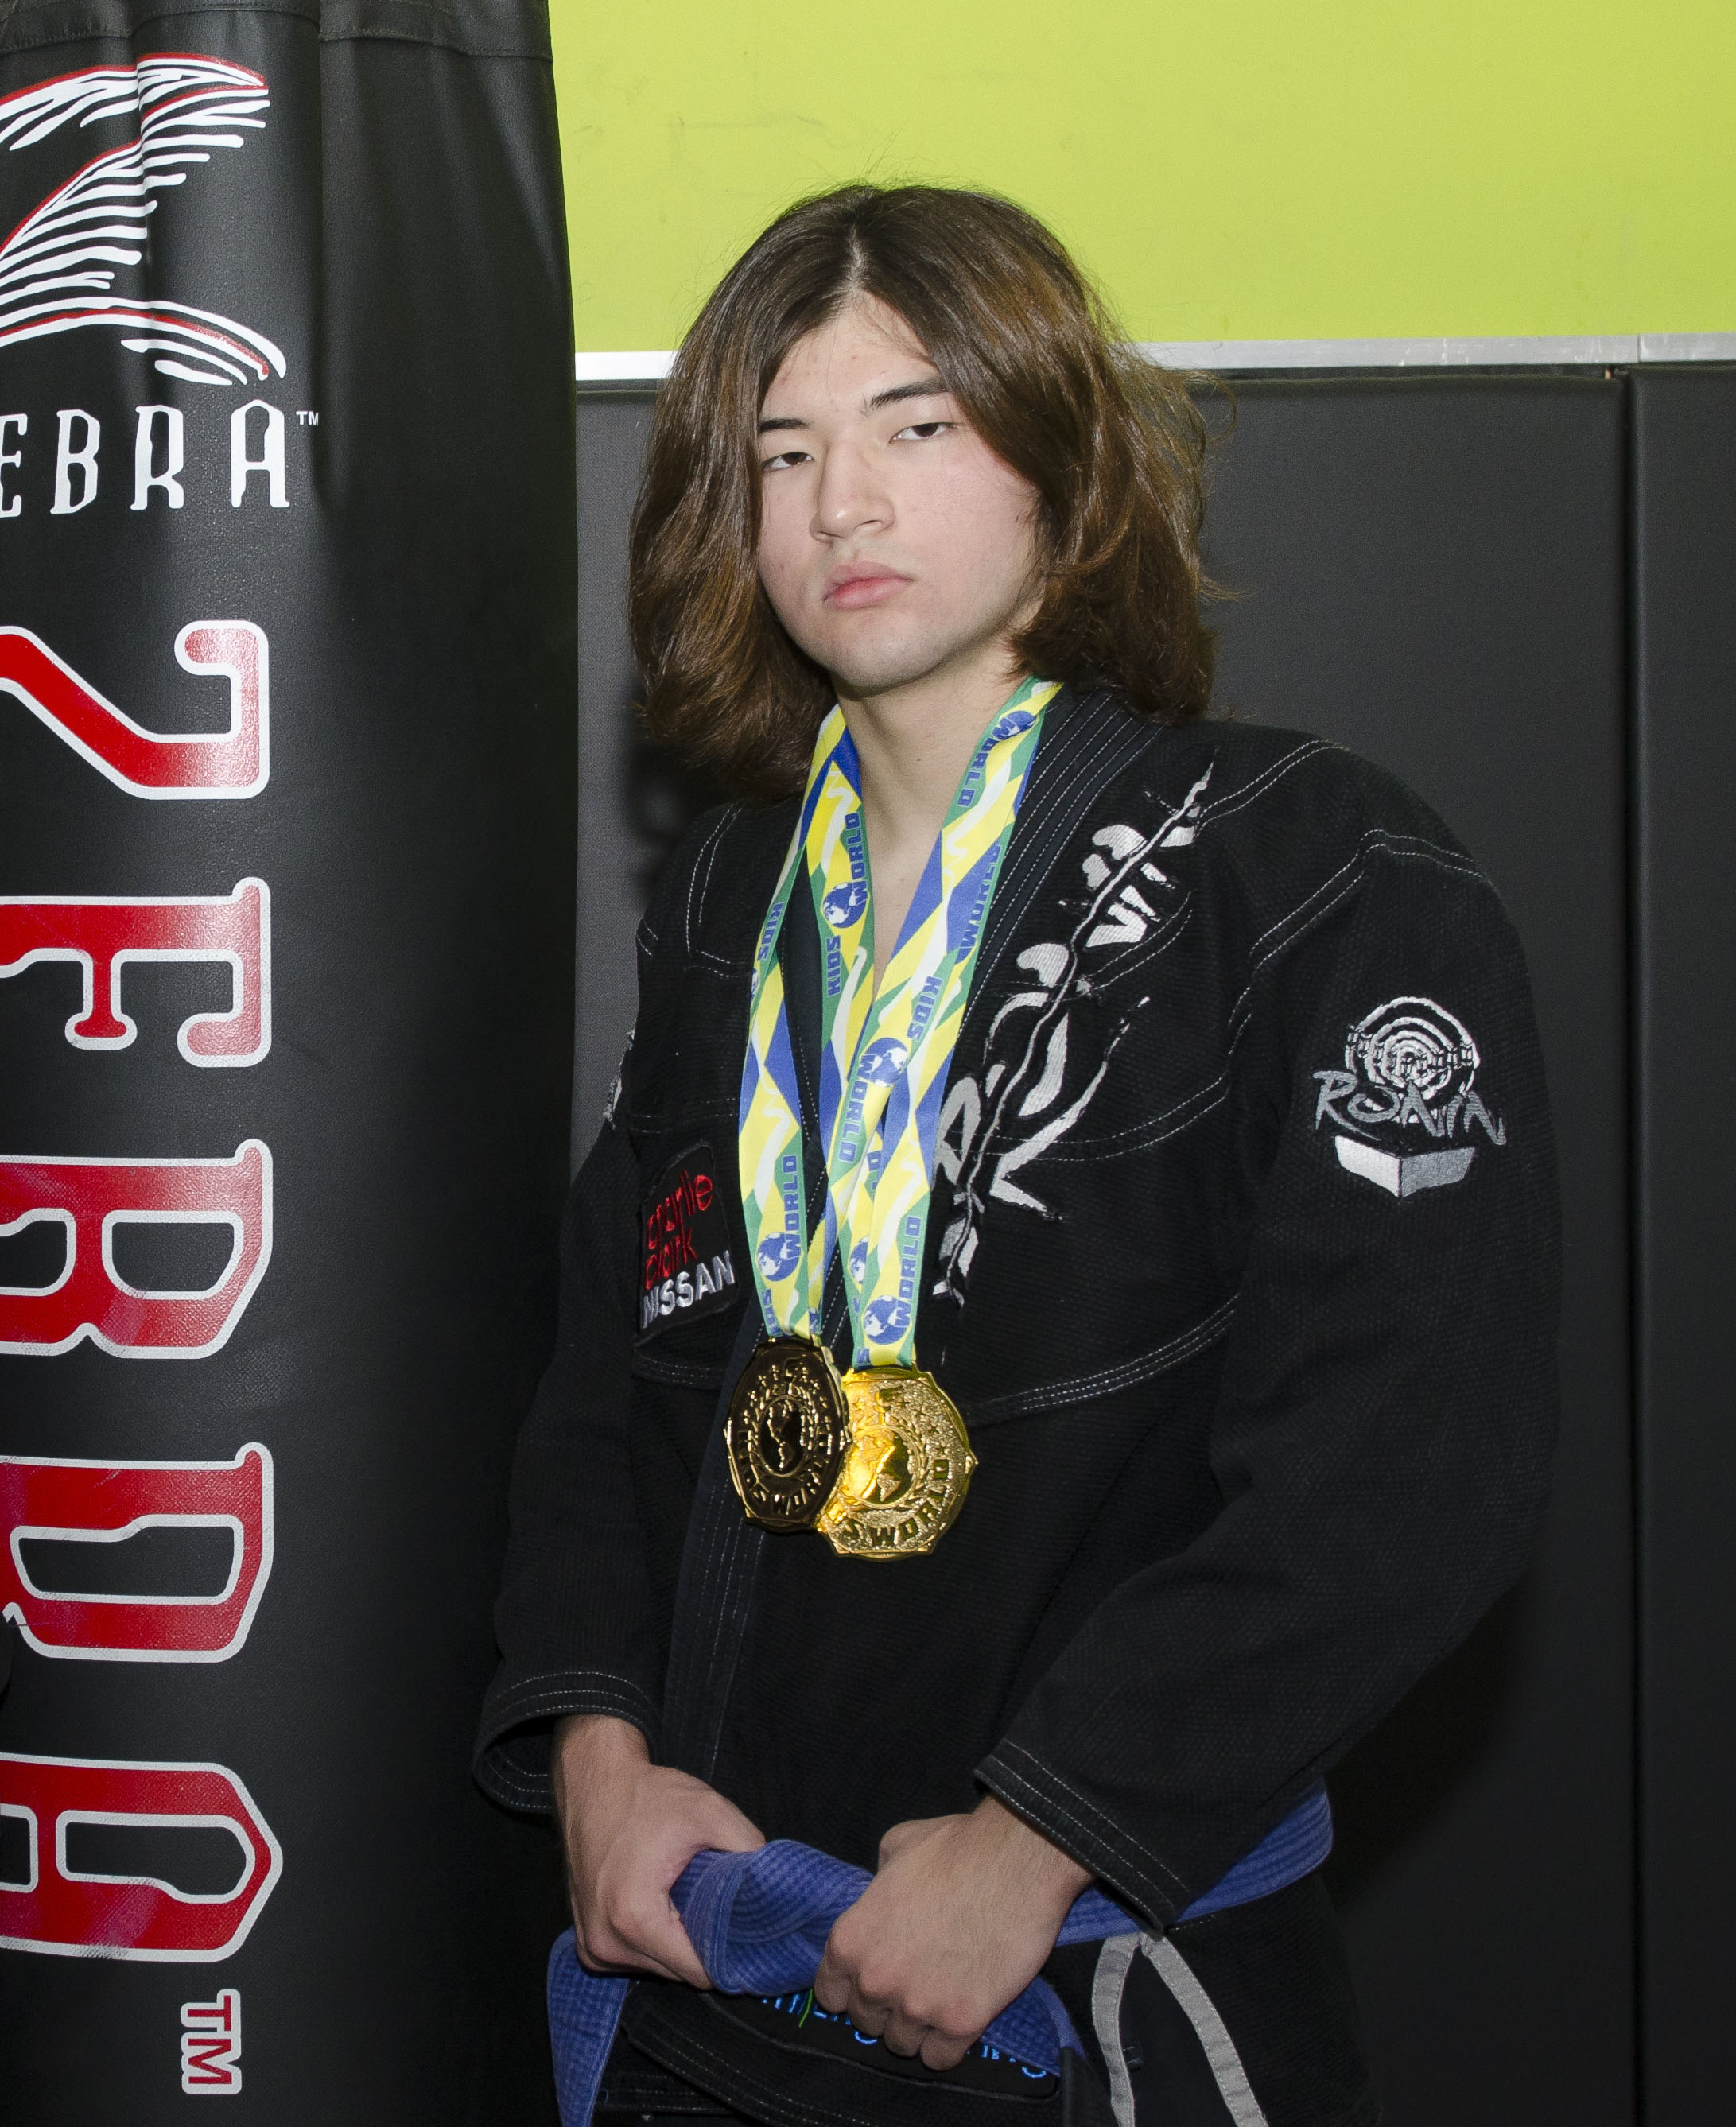 HSHP’s Dillan Tatum captures world title in Jiu-Jitsu championship